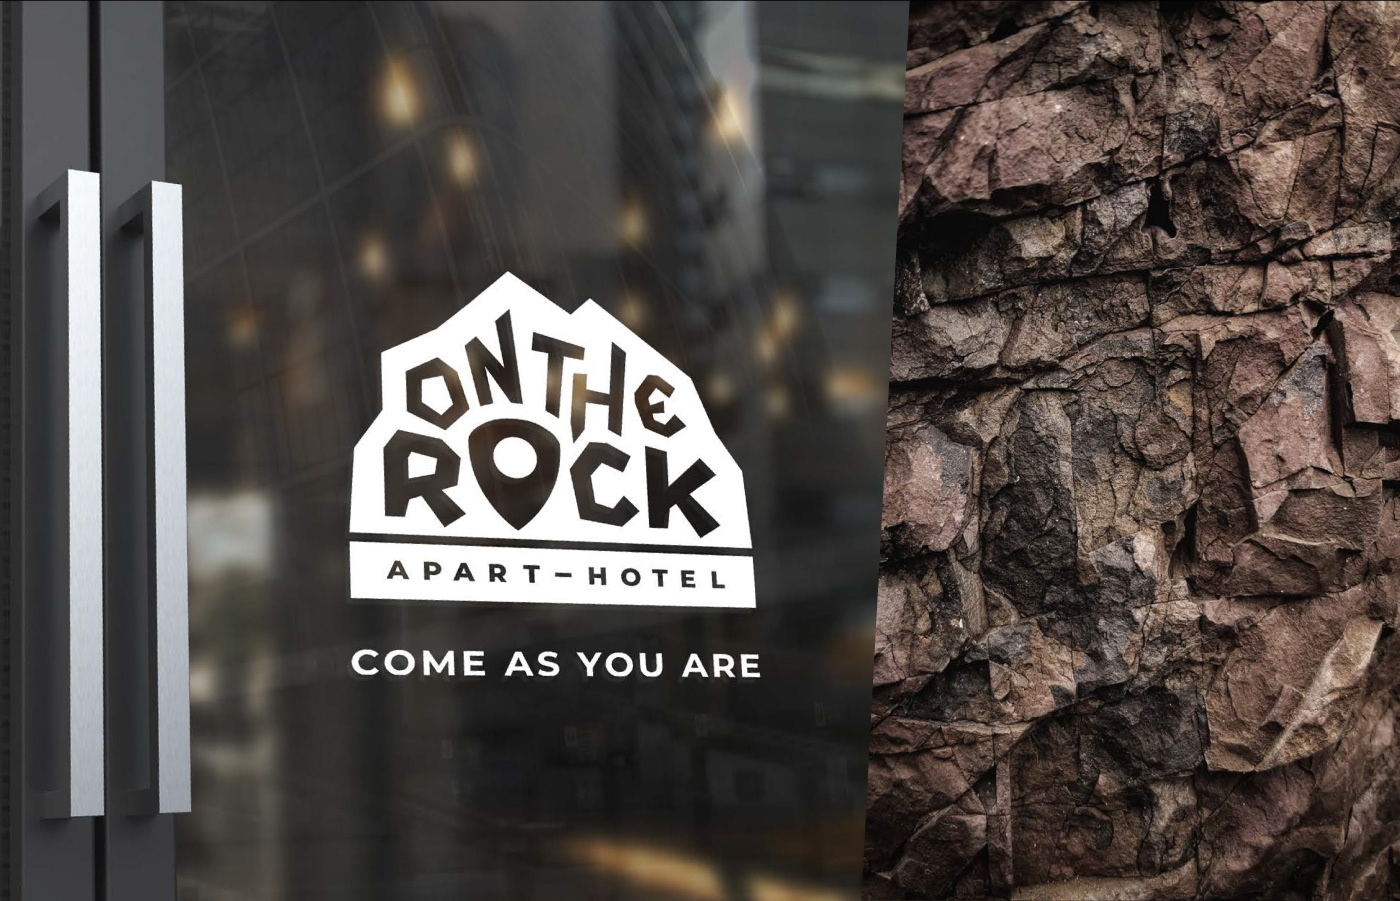 Corporate Identity hotel logo nirvana rock логотип отель фирменный стиль lettering леттеринг